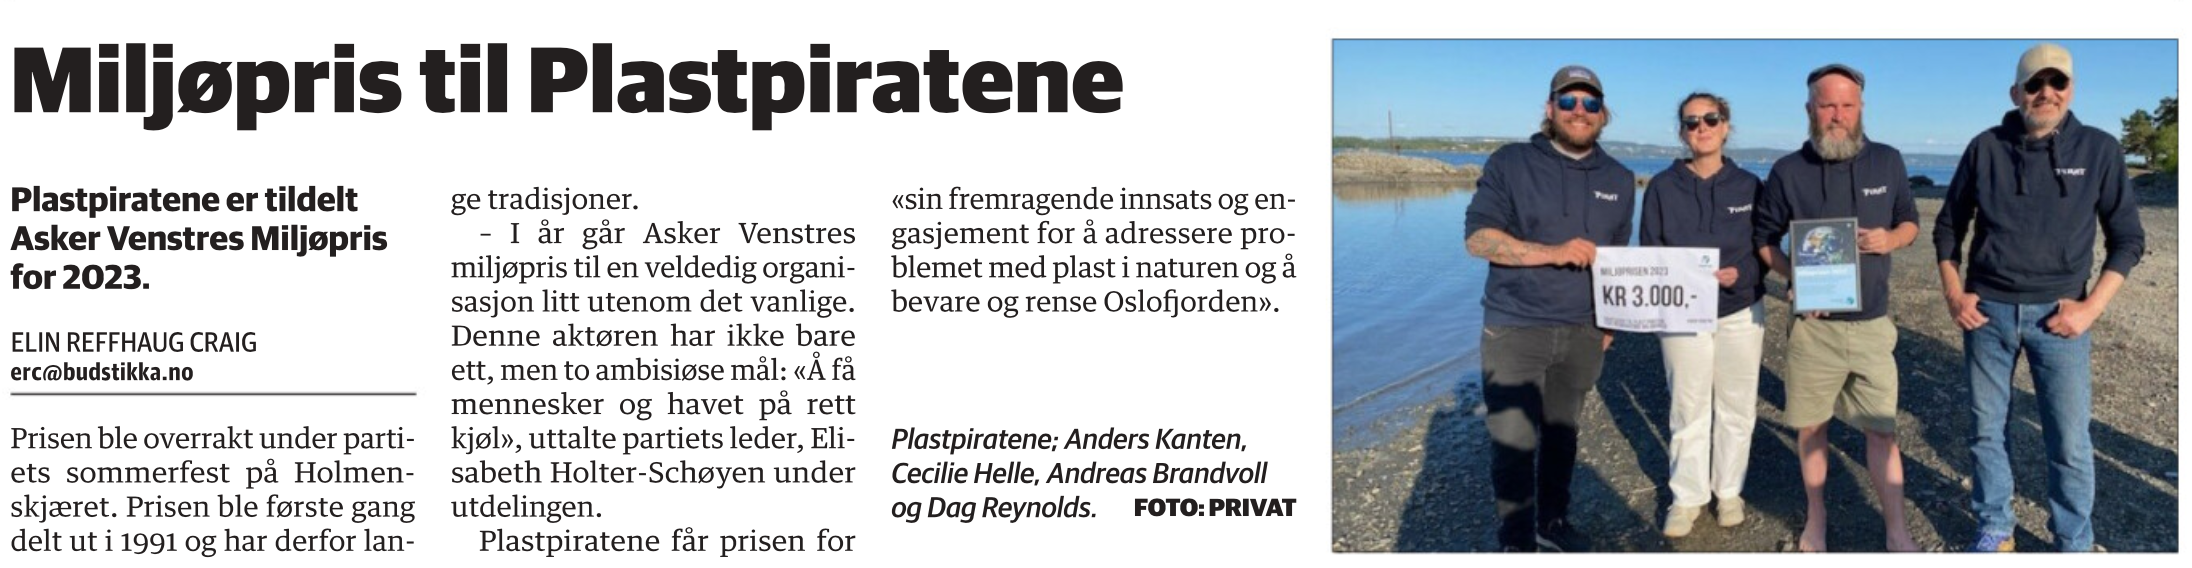 Artikkel i om Asker Venstres miljøpris til PlastPiratene Budstikka 12. juni 2023